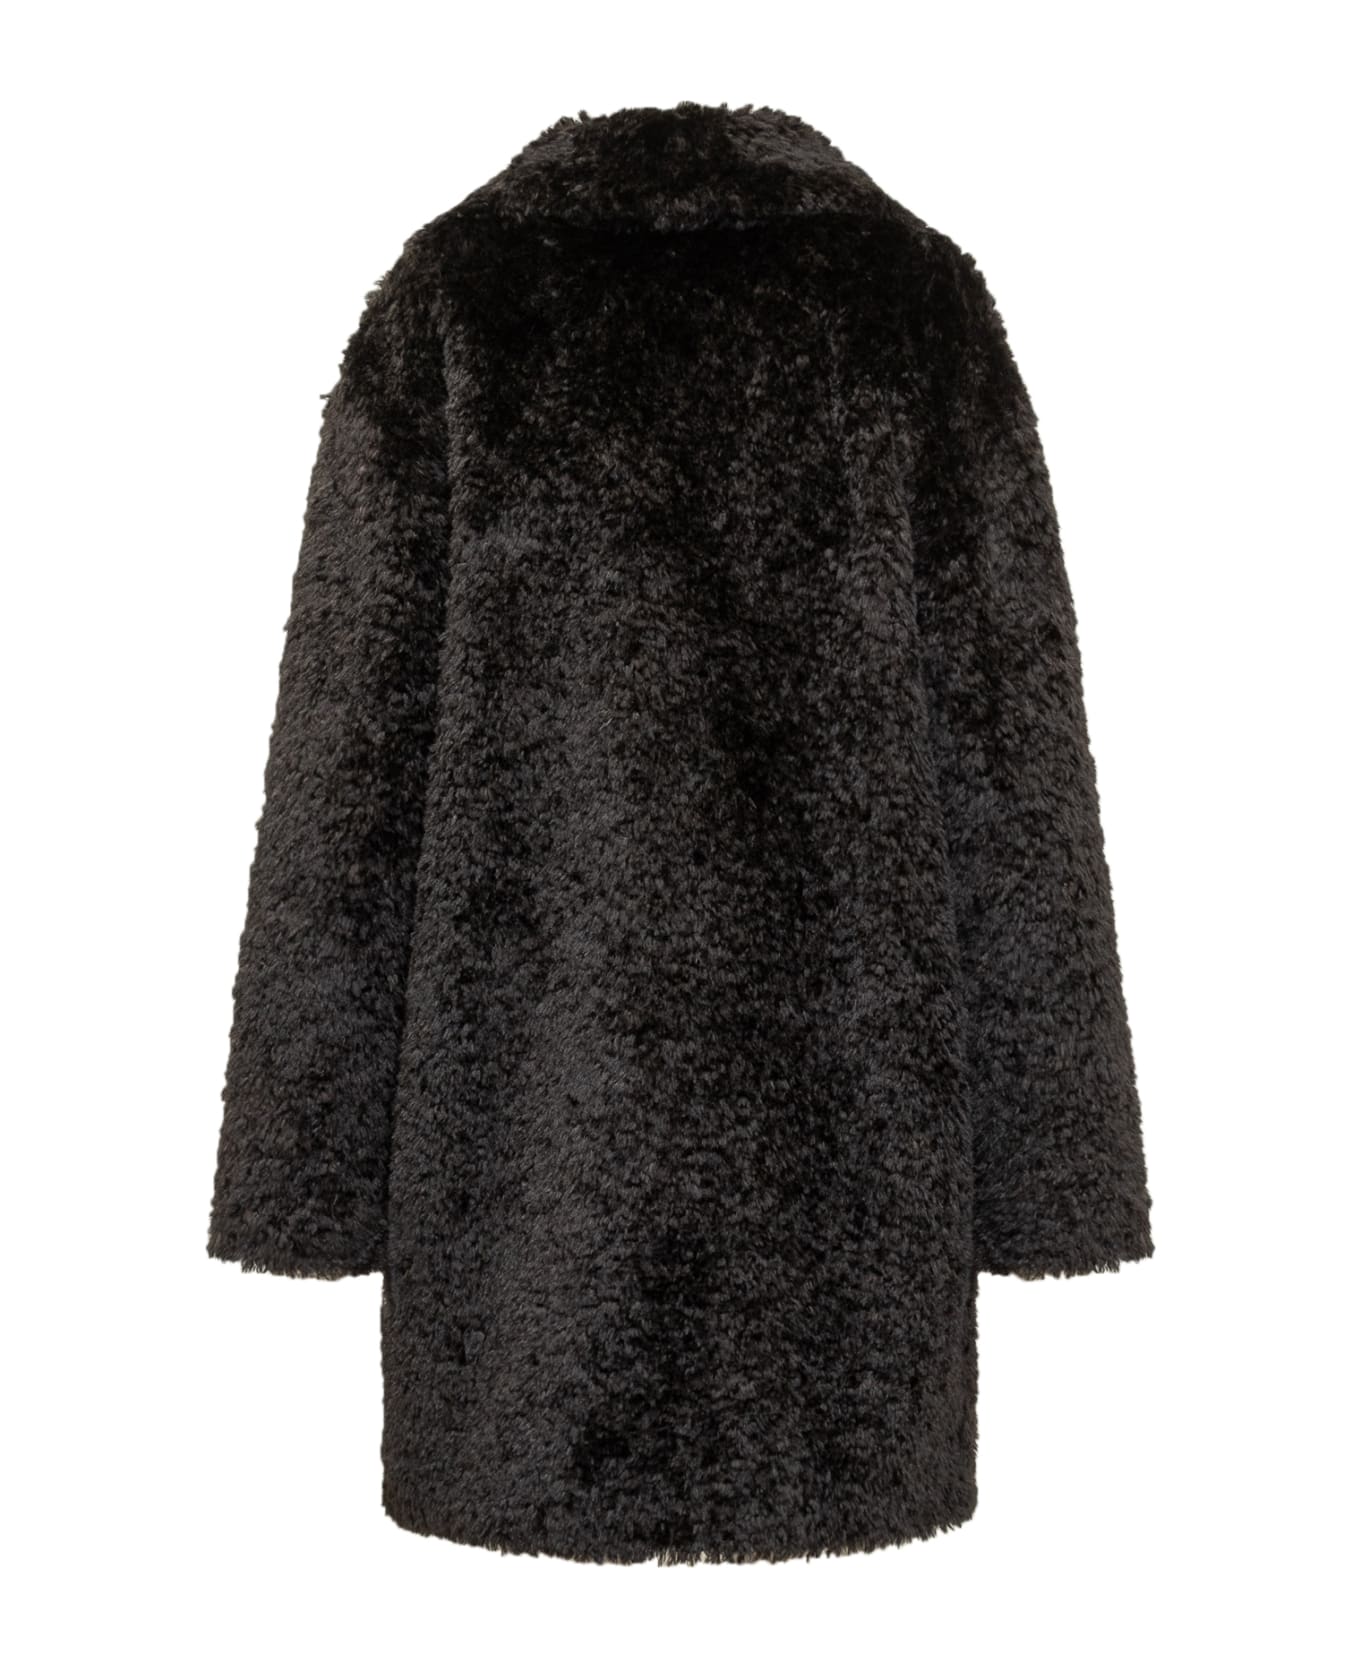 Herno Fur Coat - Nero